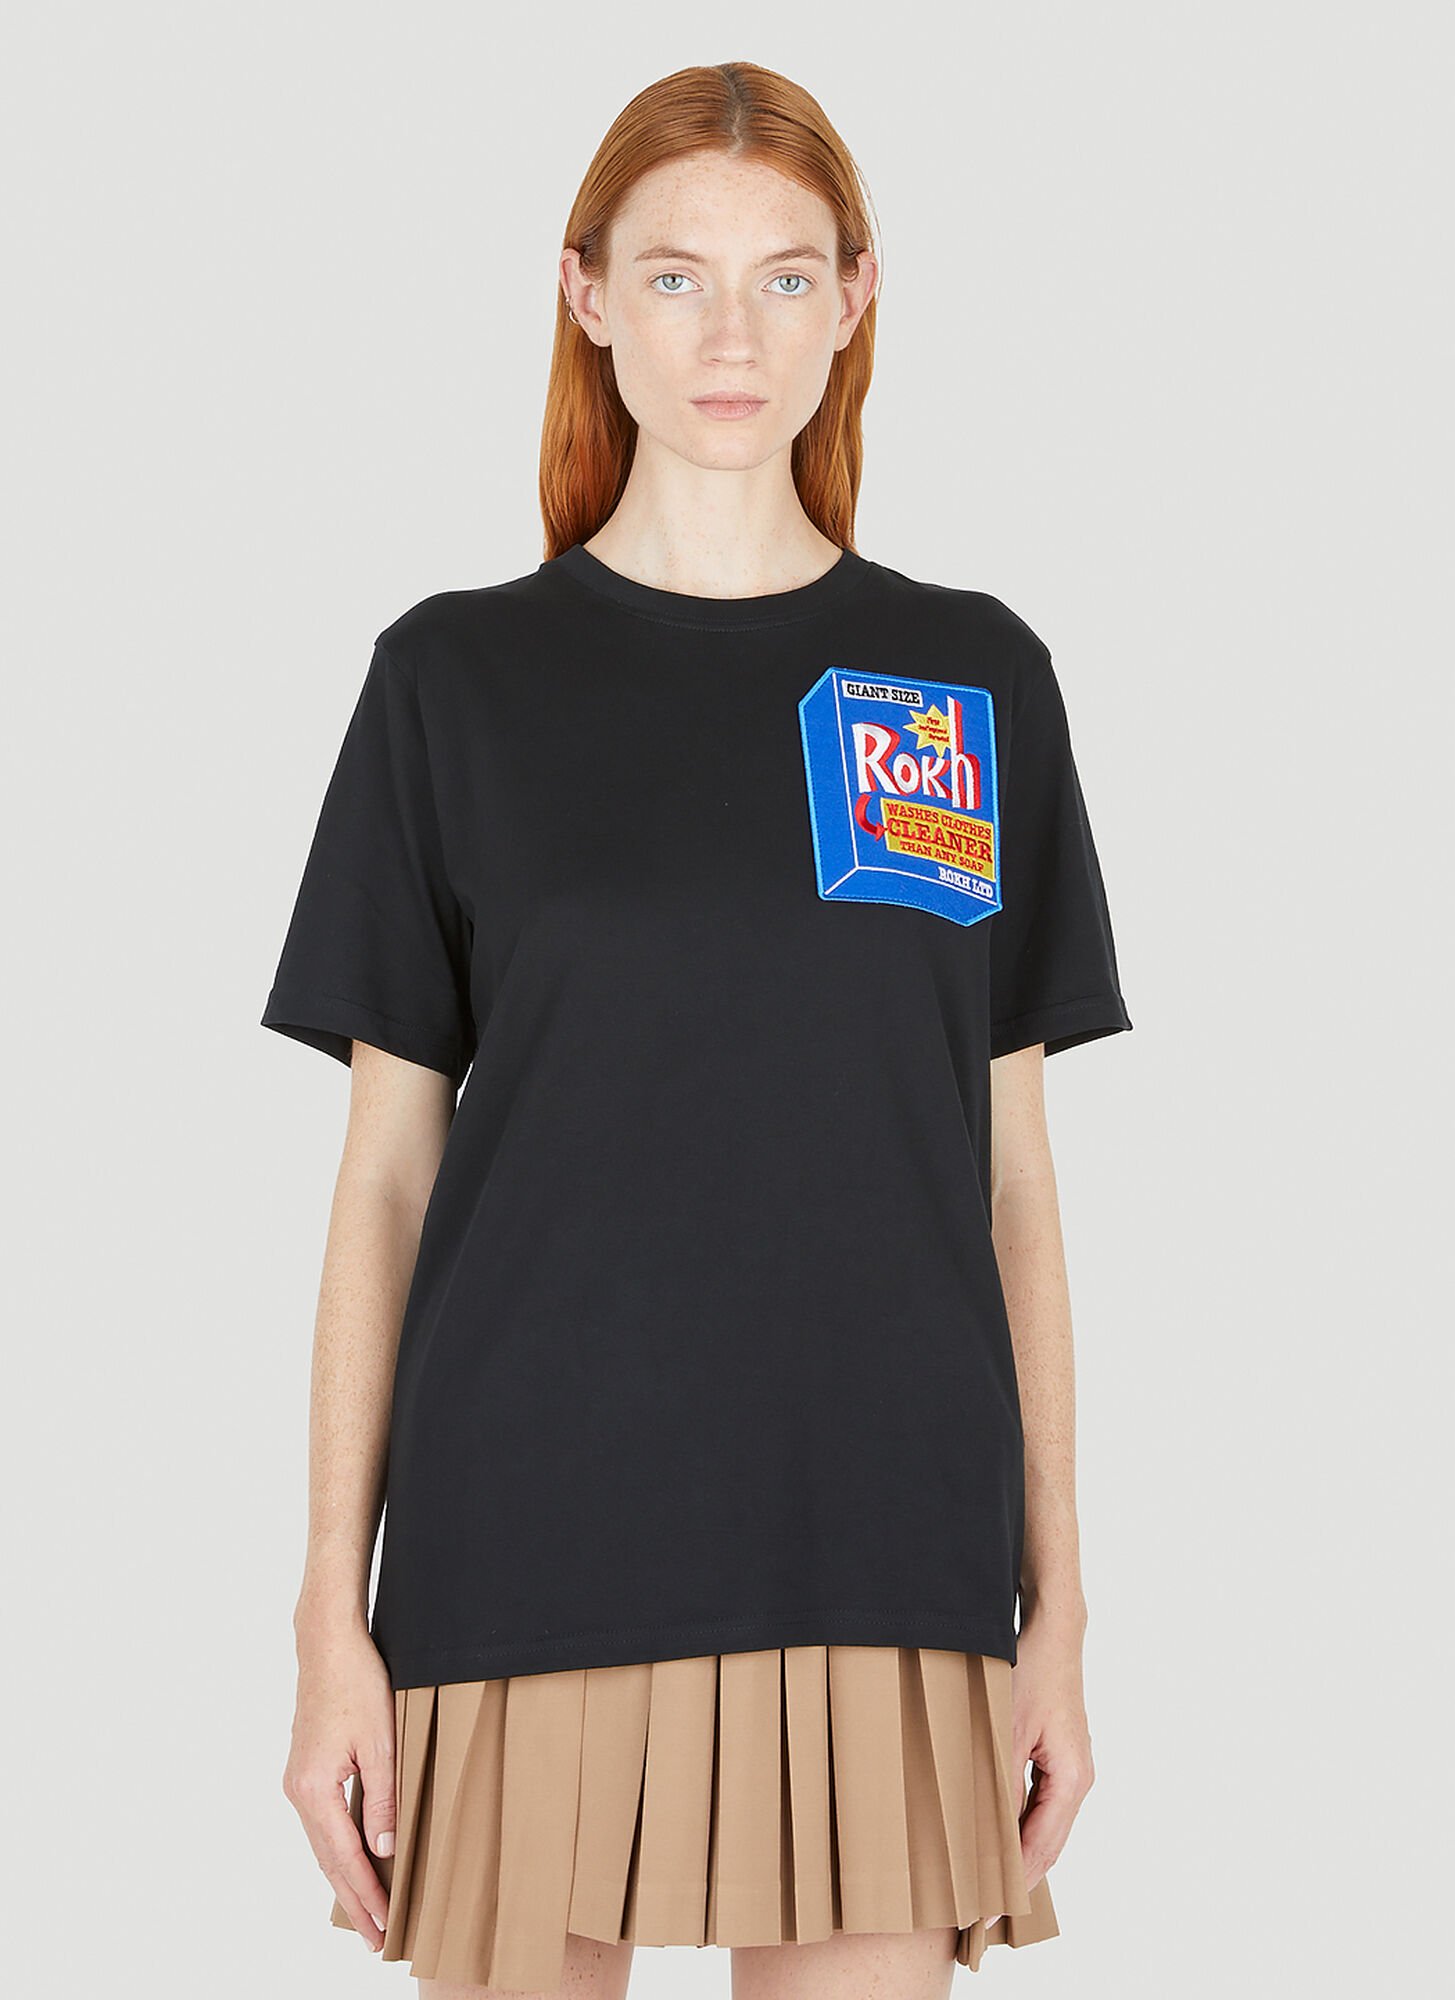 Rokh Detergent T-shirt Female Black